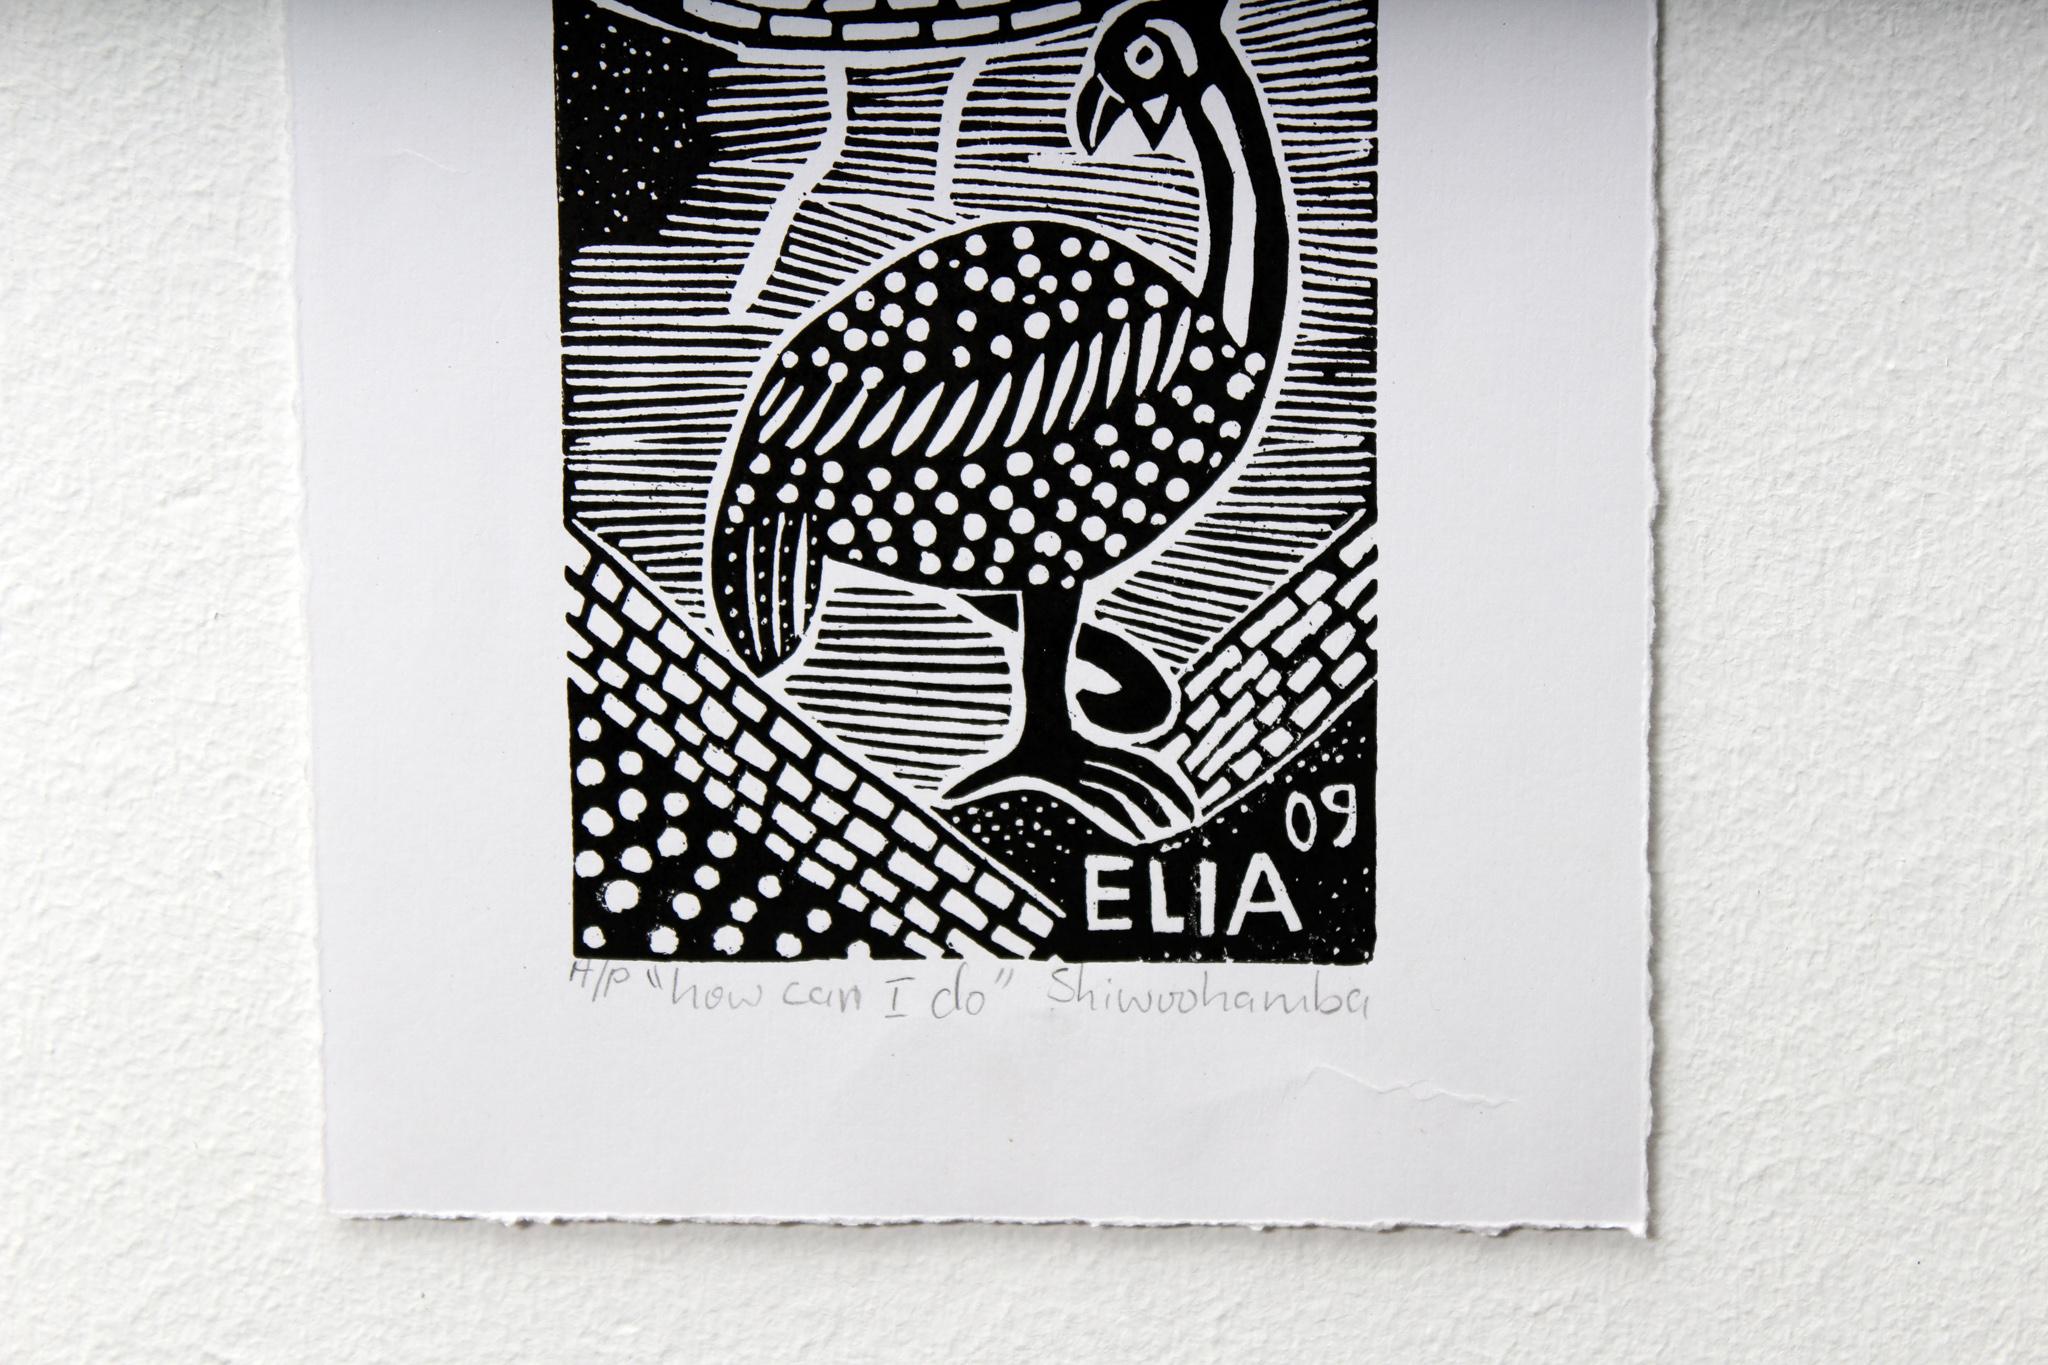 How can I do, Elia Shiwoohamba, Linoleum block print For Sale 2